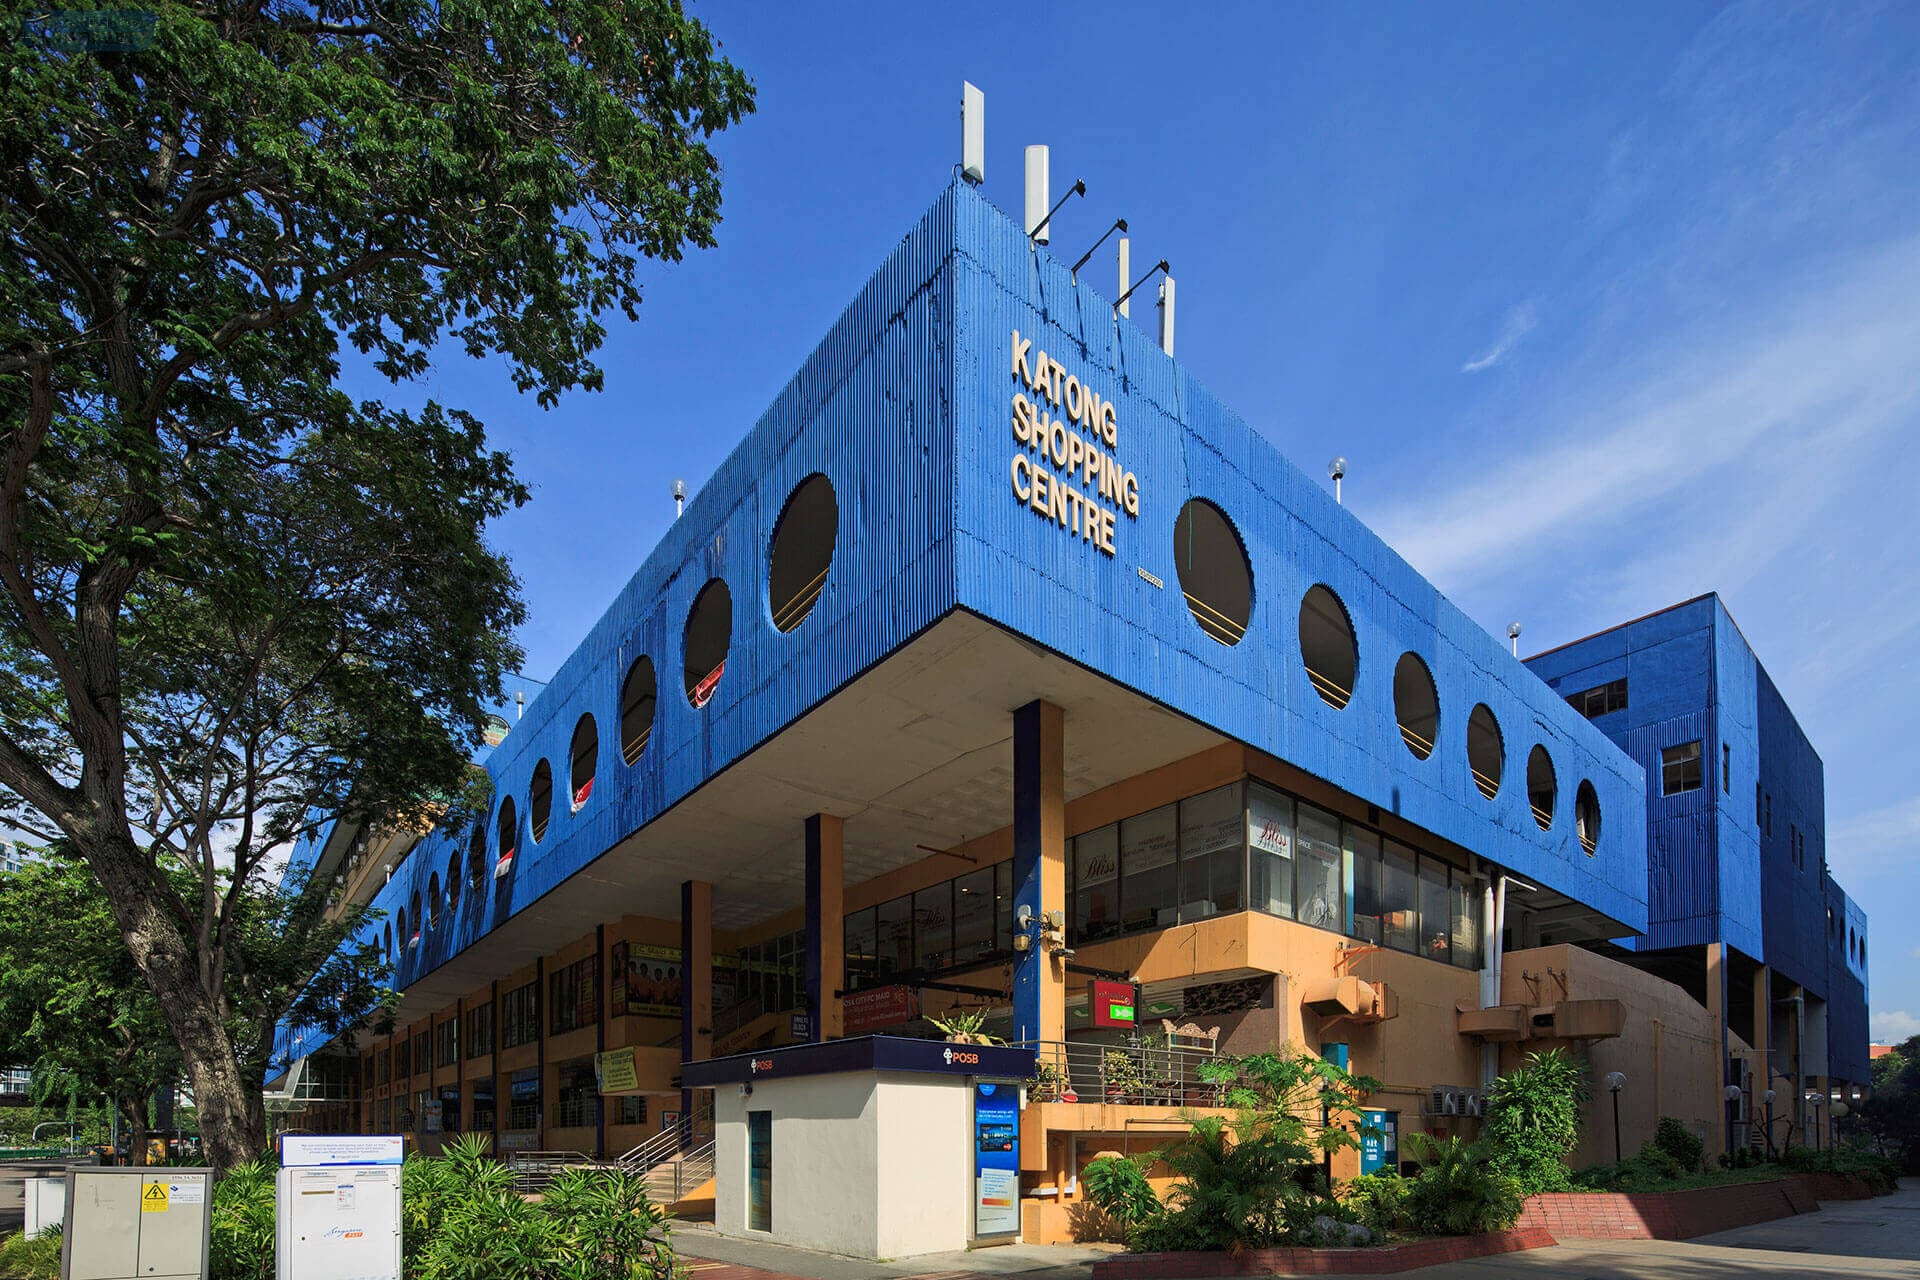 Creston Residences near Katong Shopping Centre